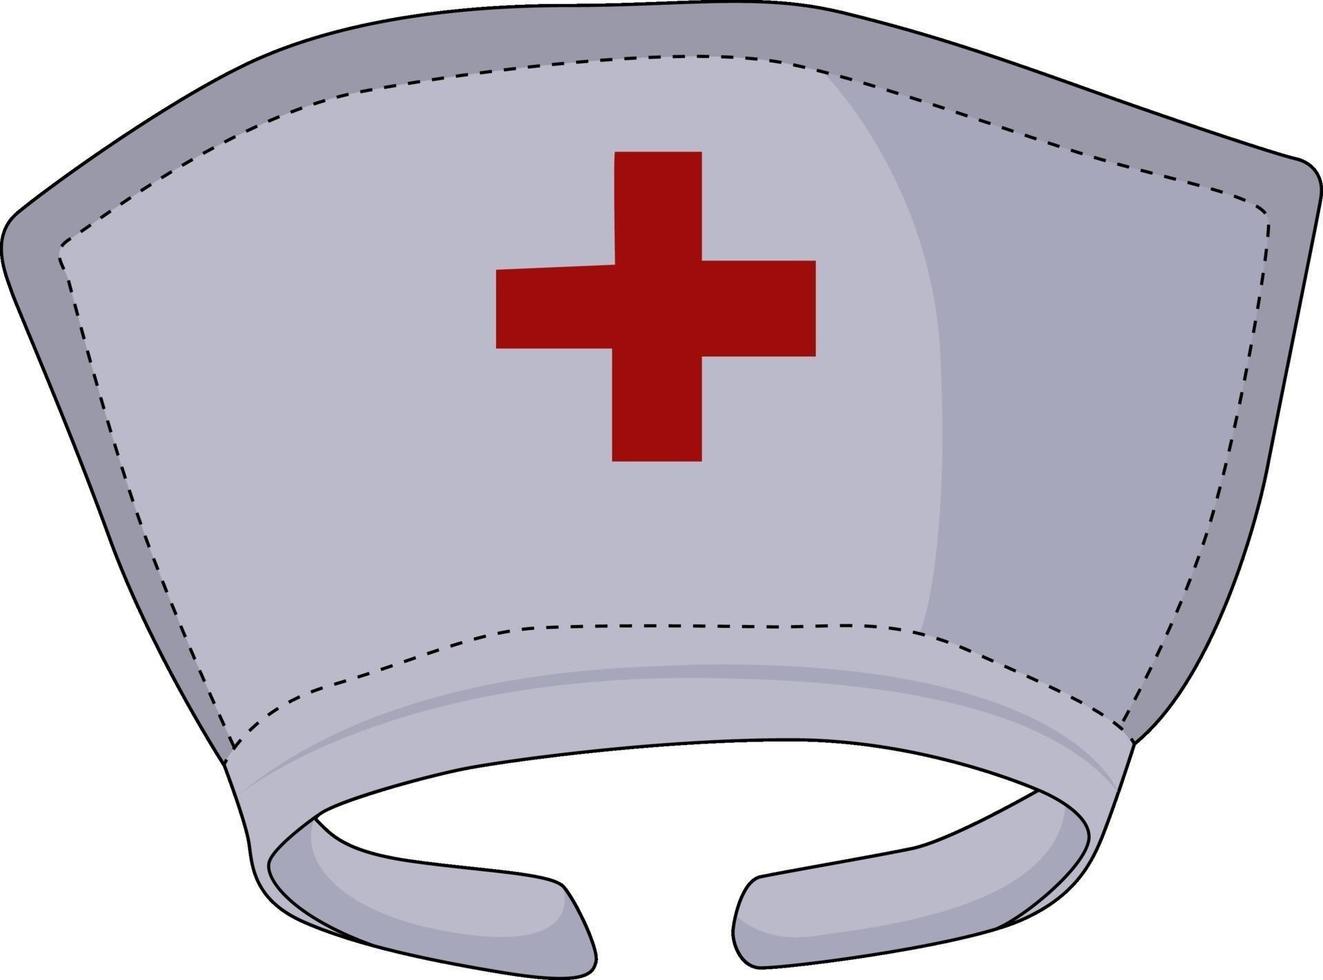 Nurse cap, illustration, vector on a white background.